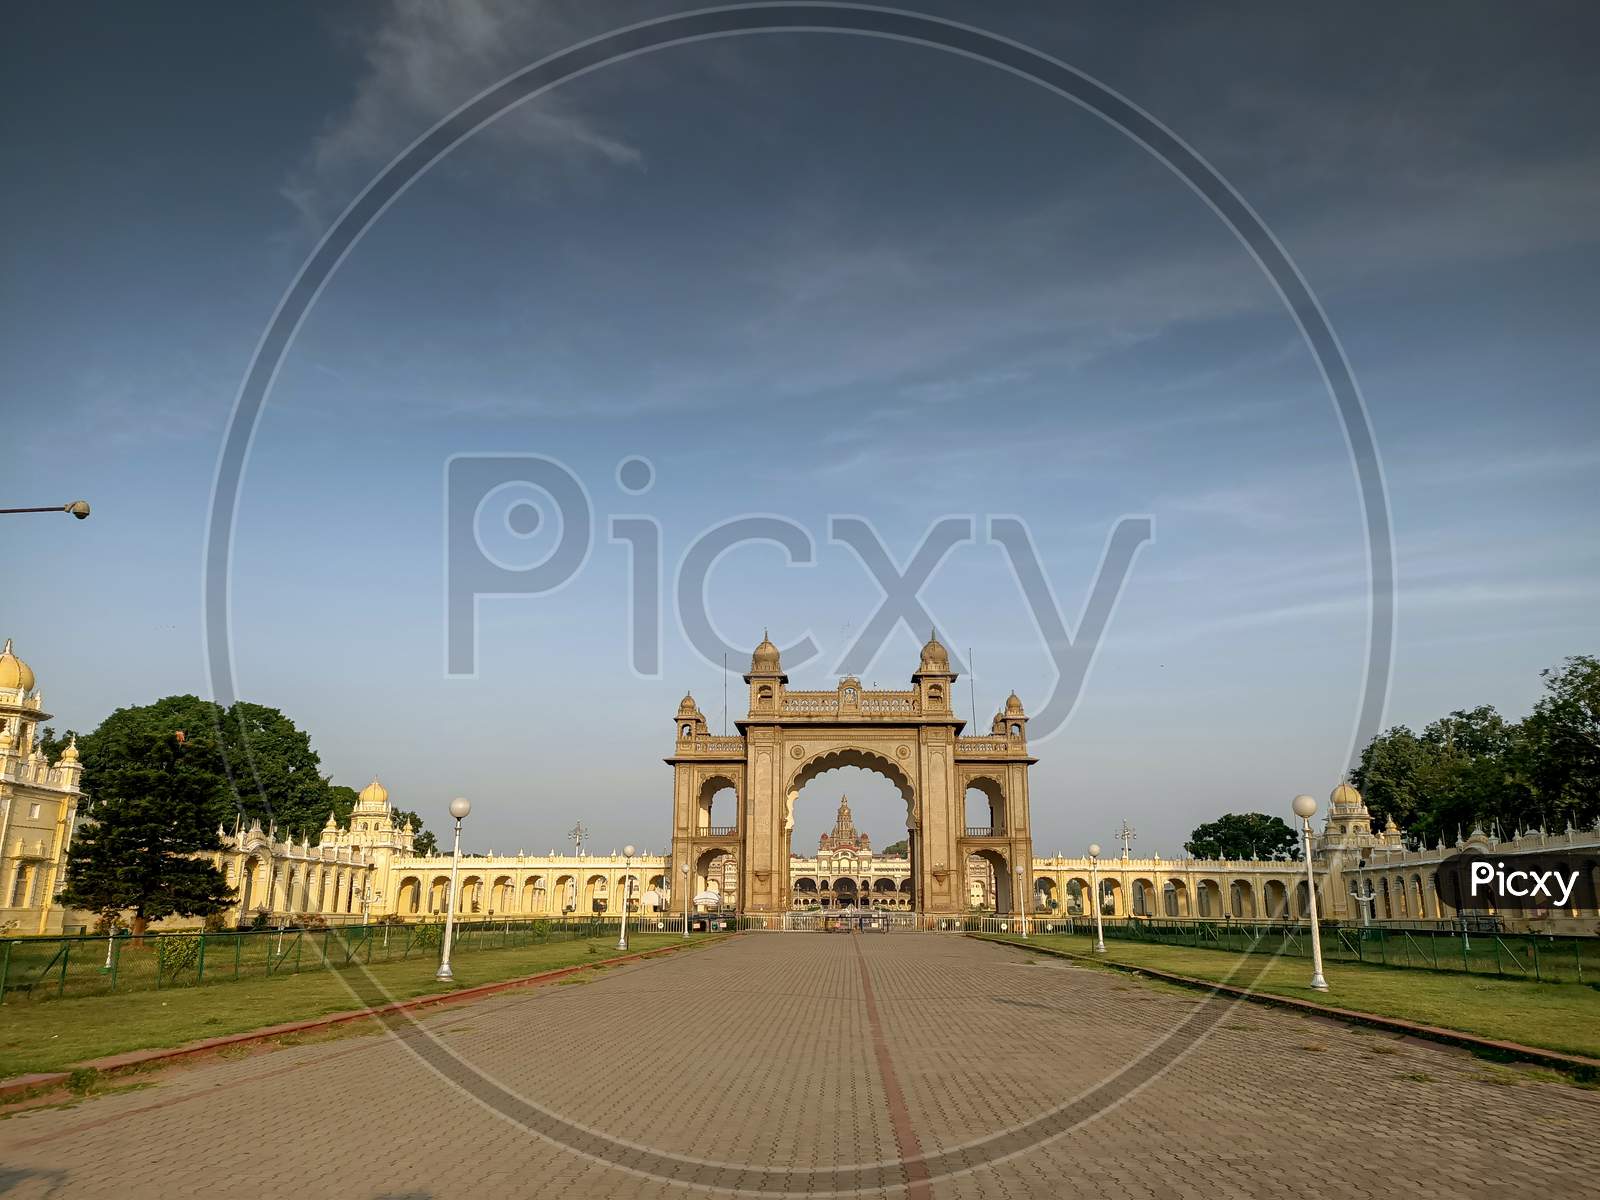 Mysore Royal Ambavilas  Palace in Karnataka/India.